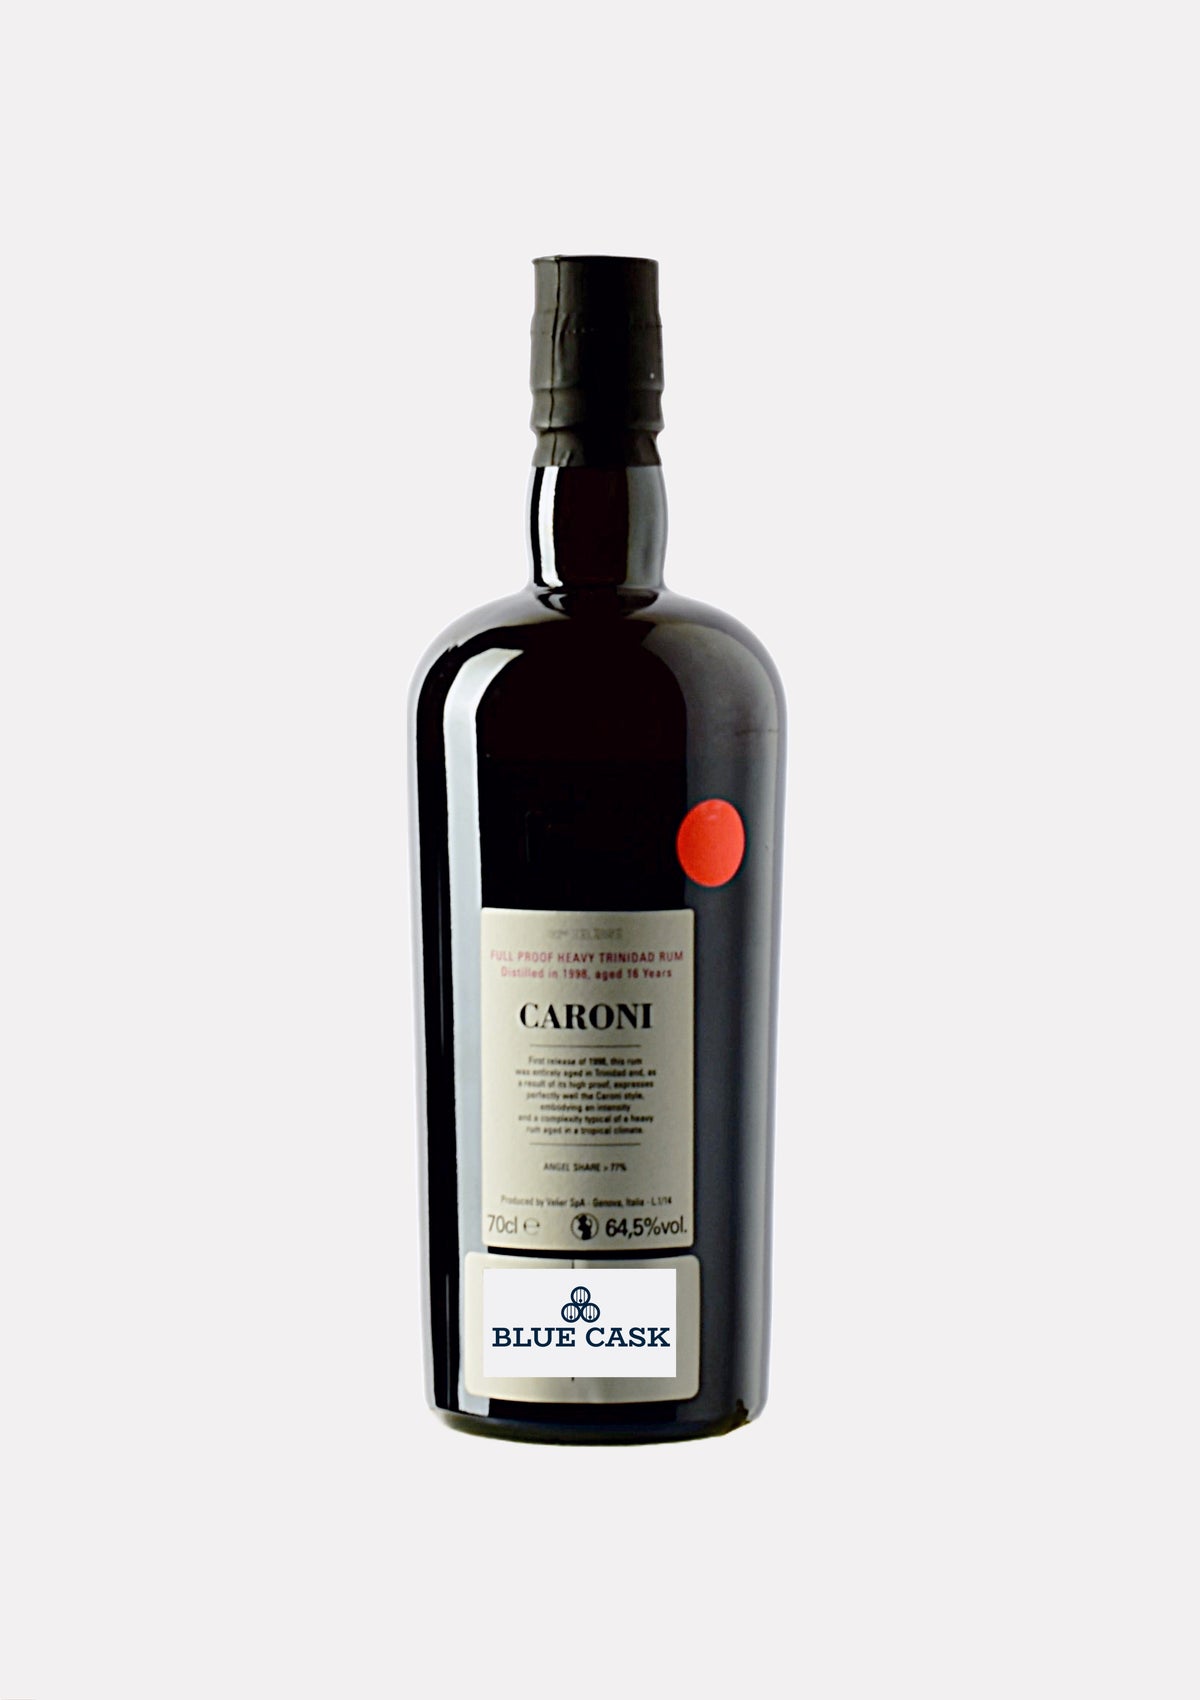 Velier Caroni 1998-2014 16 Years Full Proof Heavy Trinidad Rum 32th Release